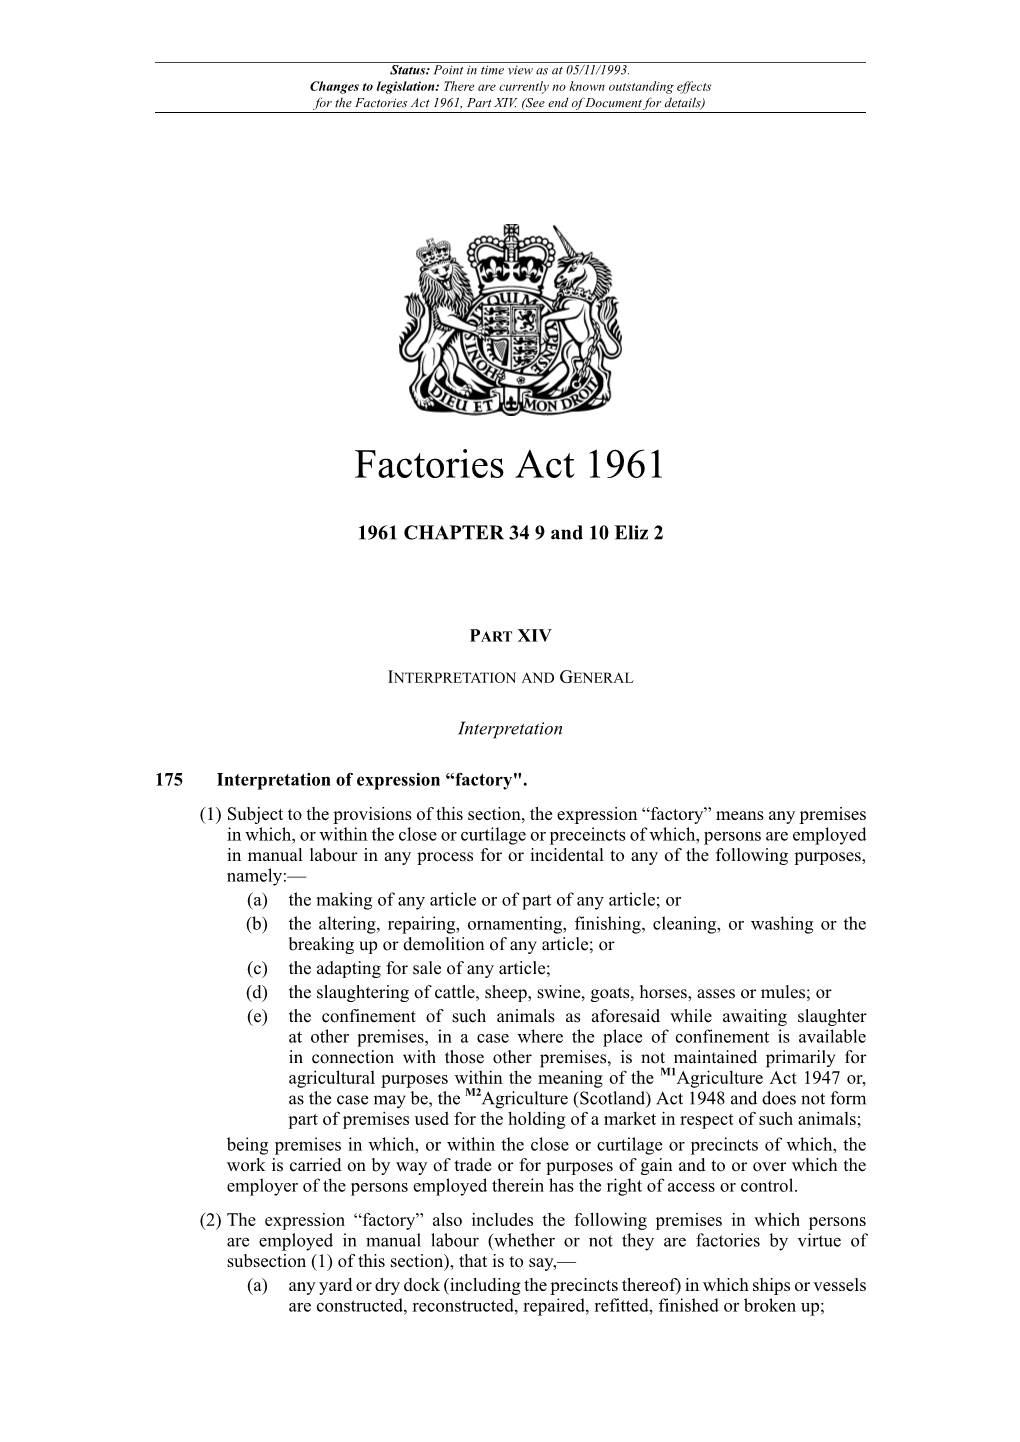 Factories Act 1961, Part XIV